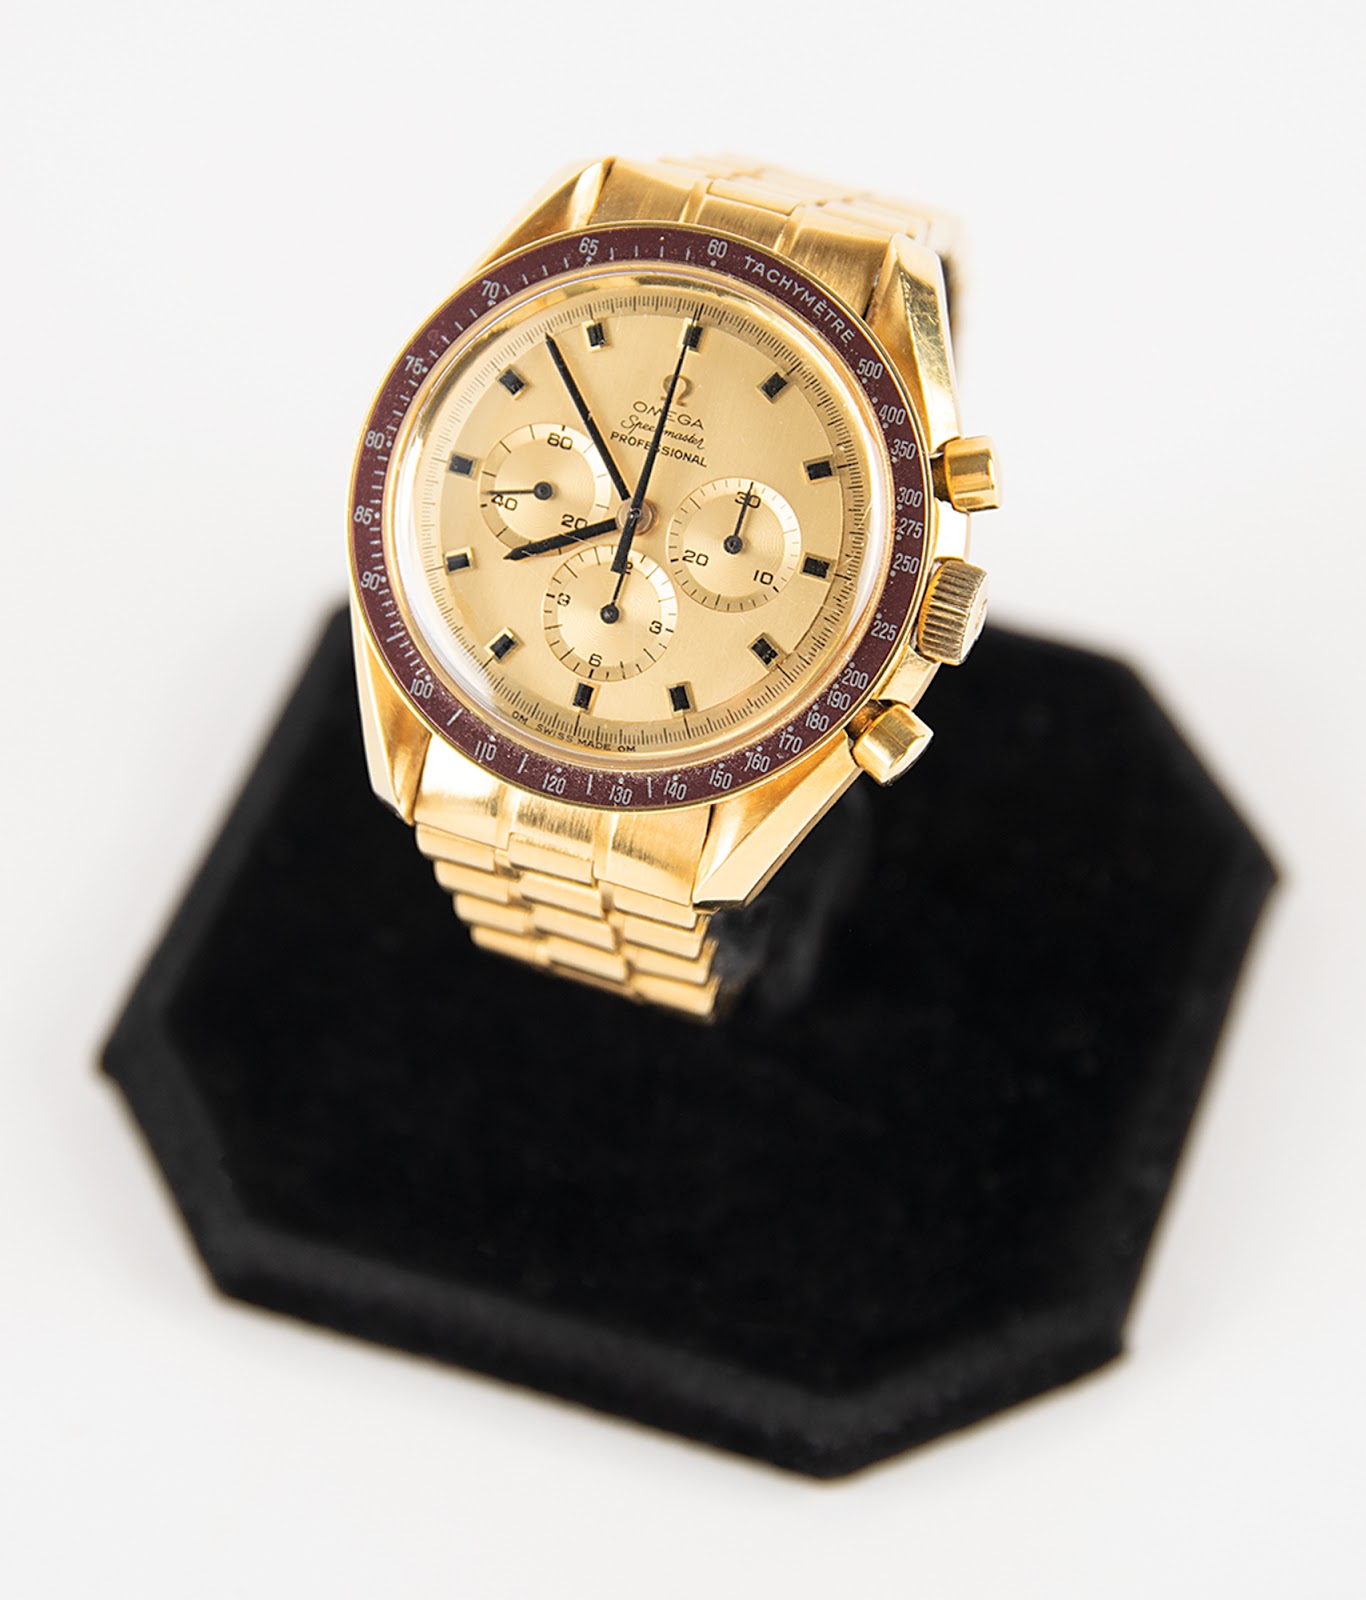 Wally Schirra’s 18K gold Omega Speedmaster professional 1969 Apollo 11 commemorative watch.